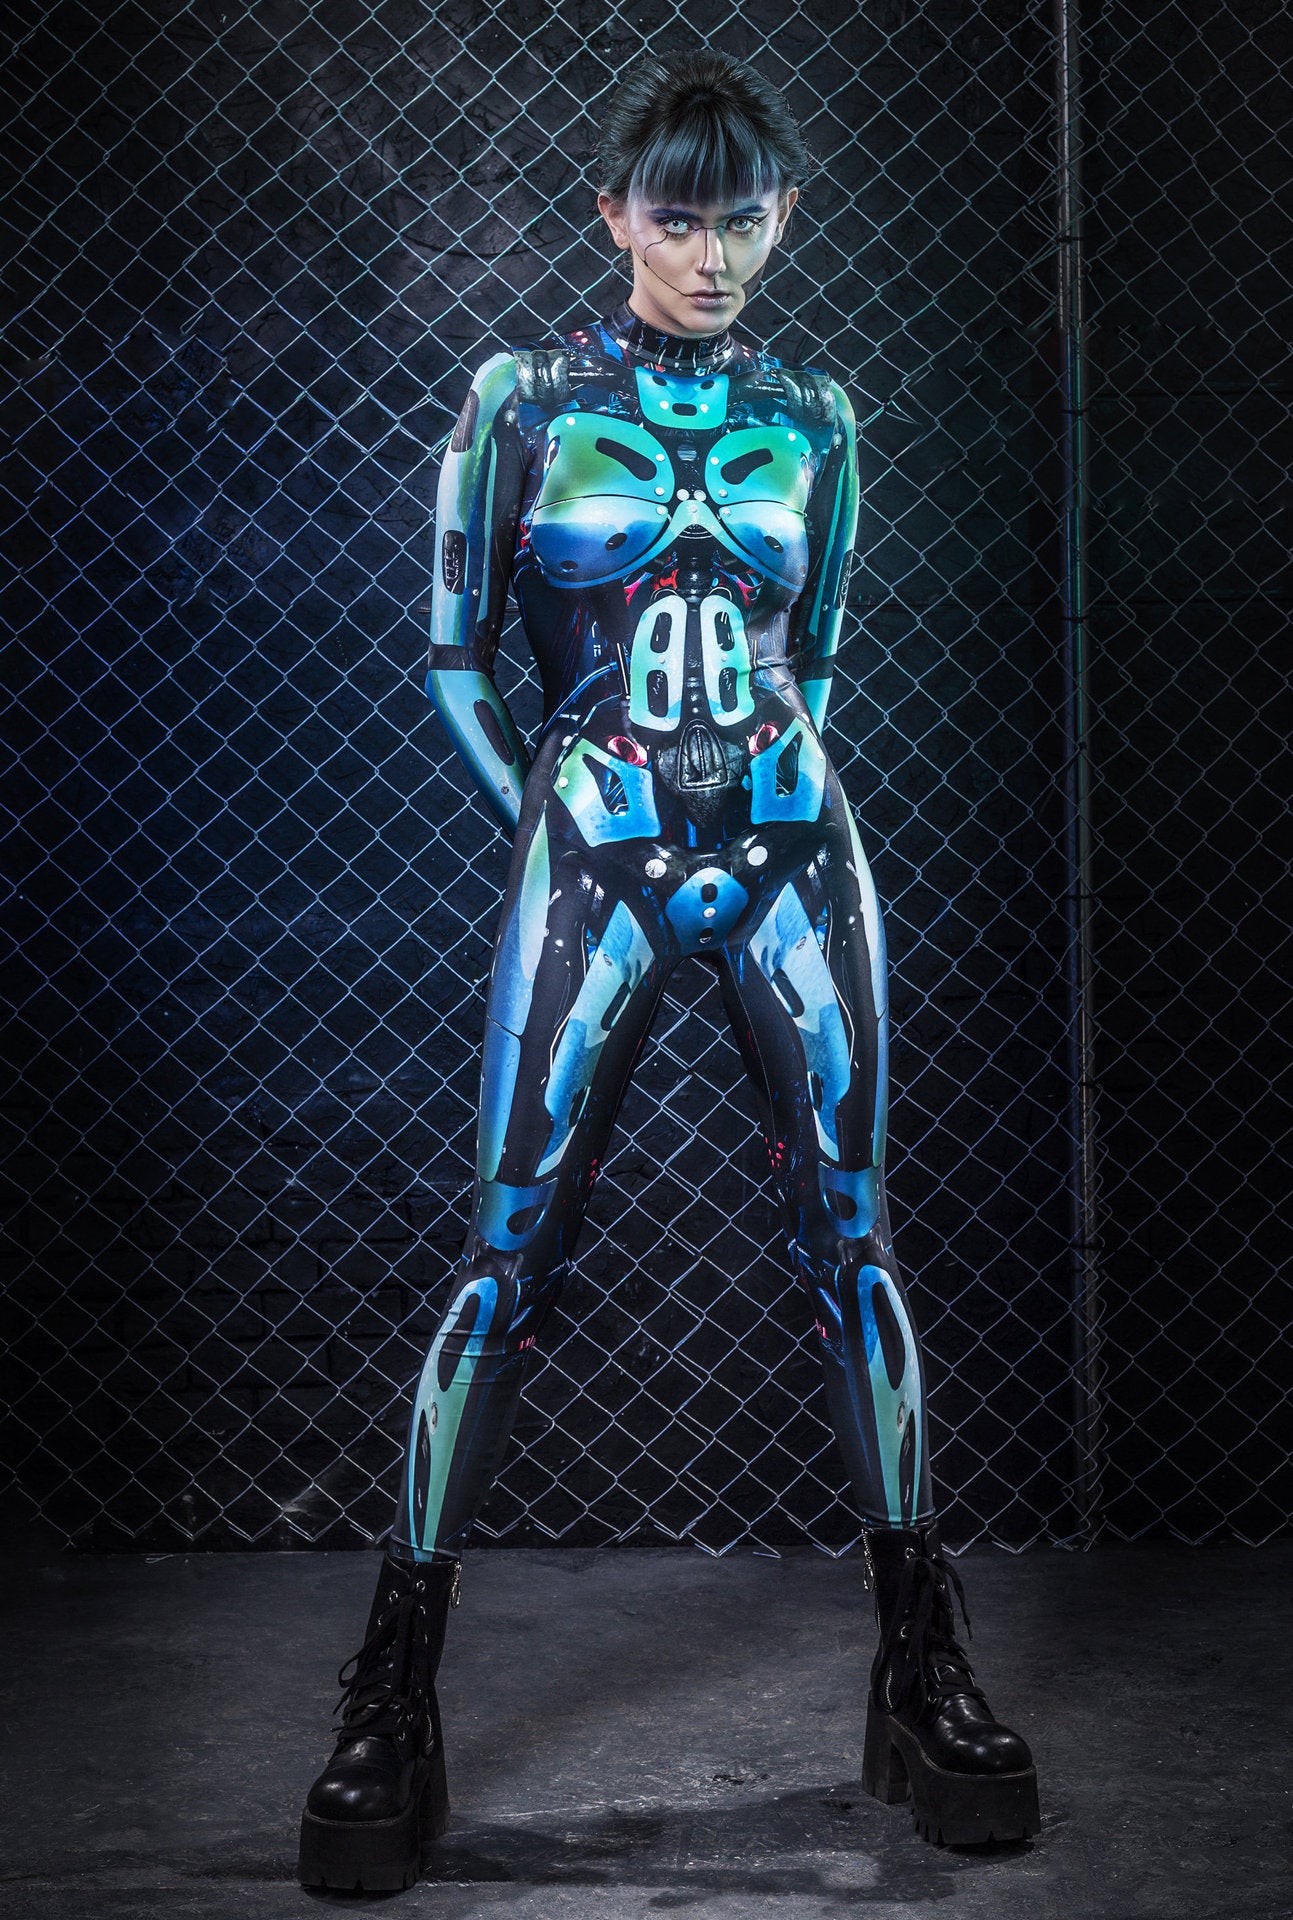 Cyberpunk Sexy Robot Costume - 2077